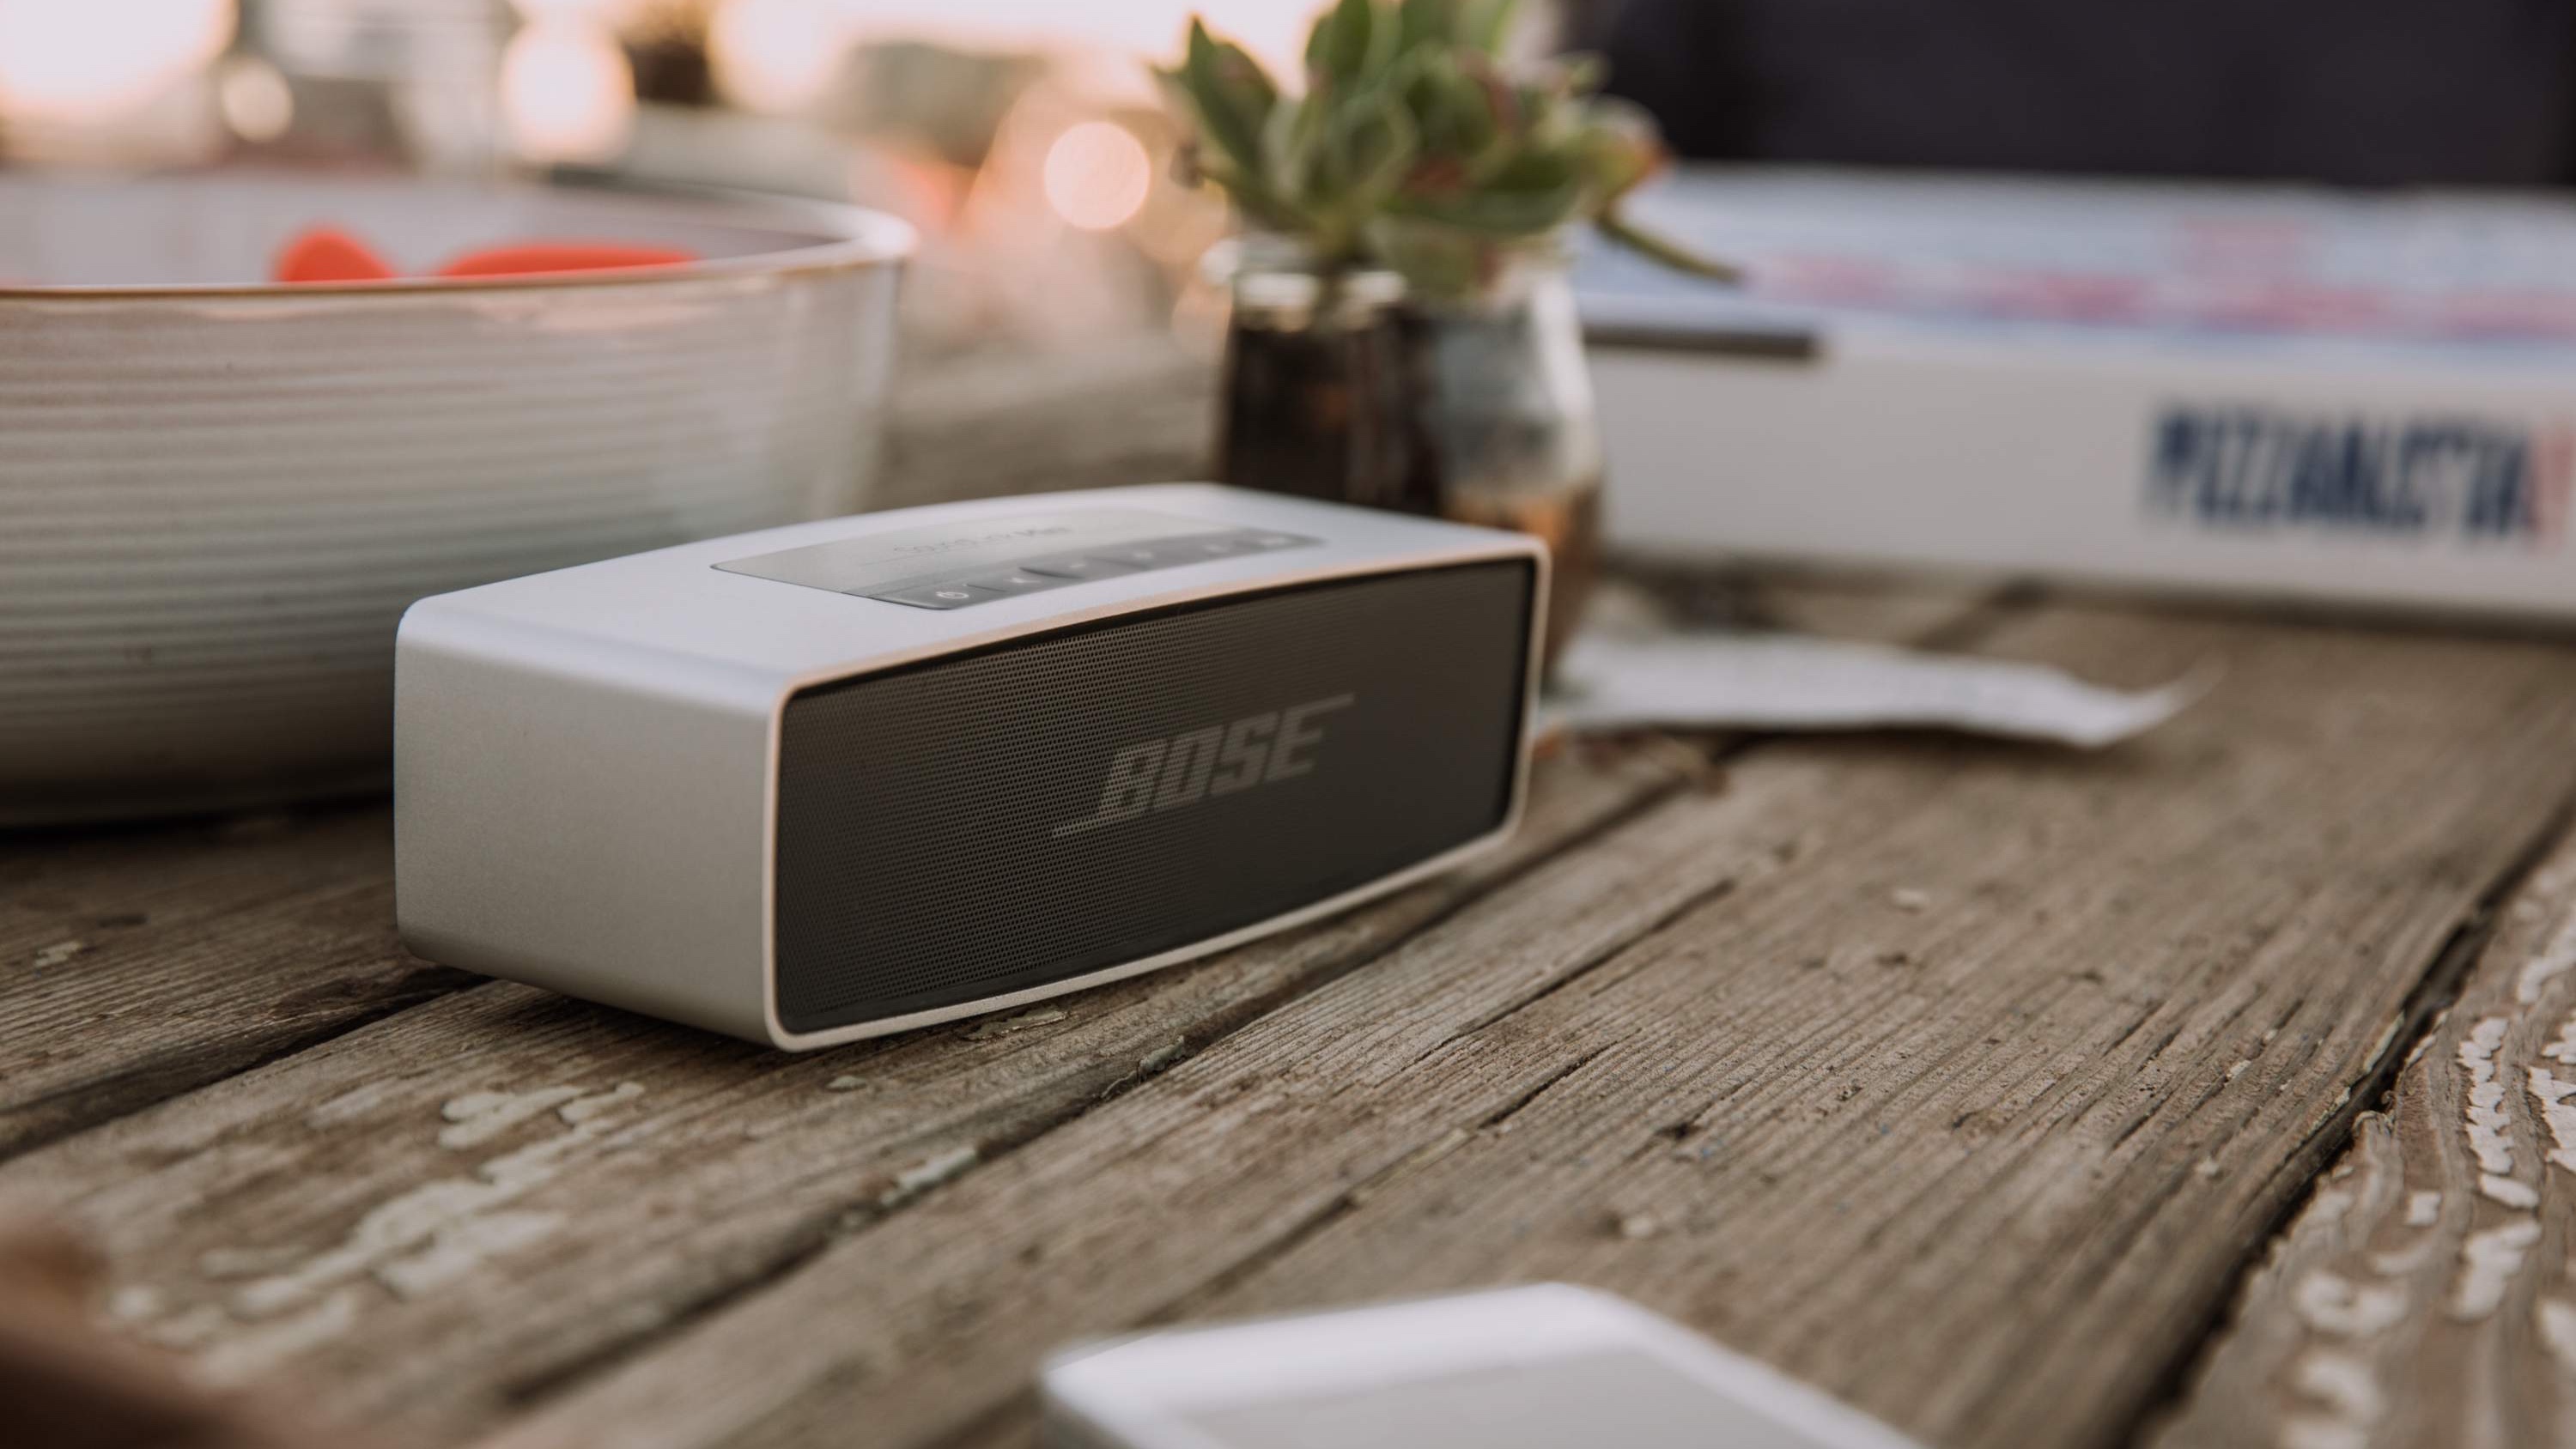 Bose SoundLink Mini Portable Bluetooth Speaker $159 (Orig. $200 